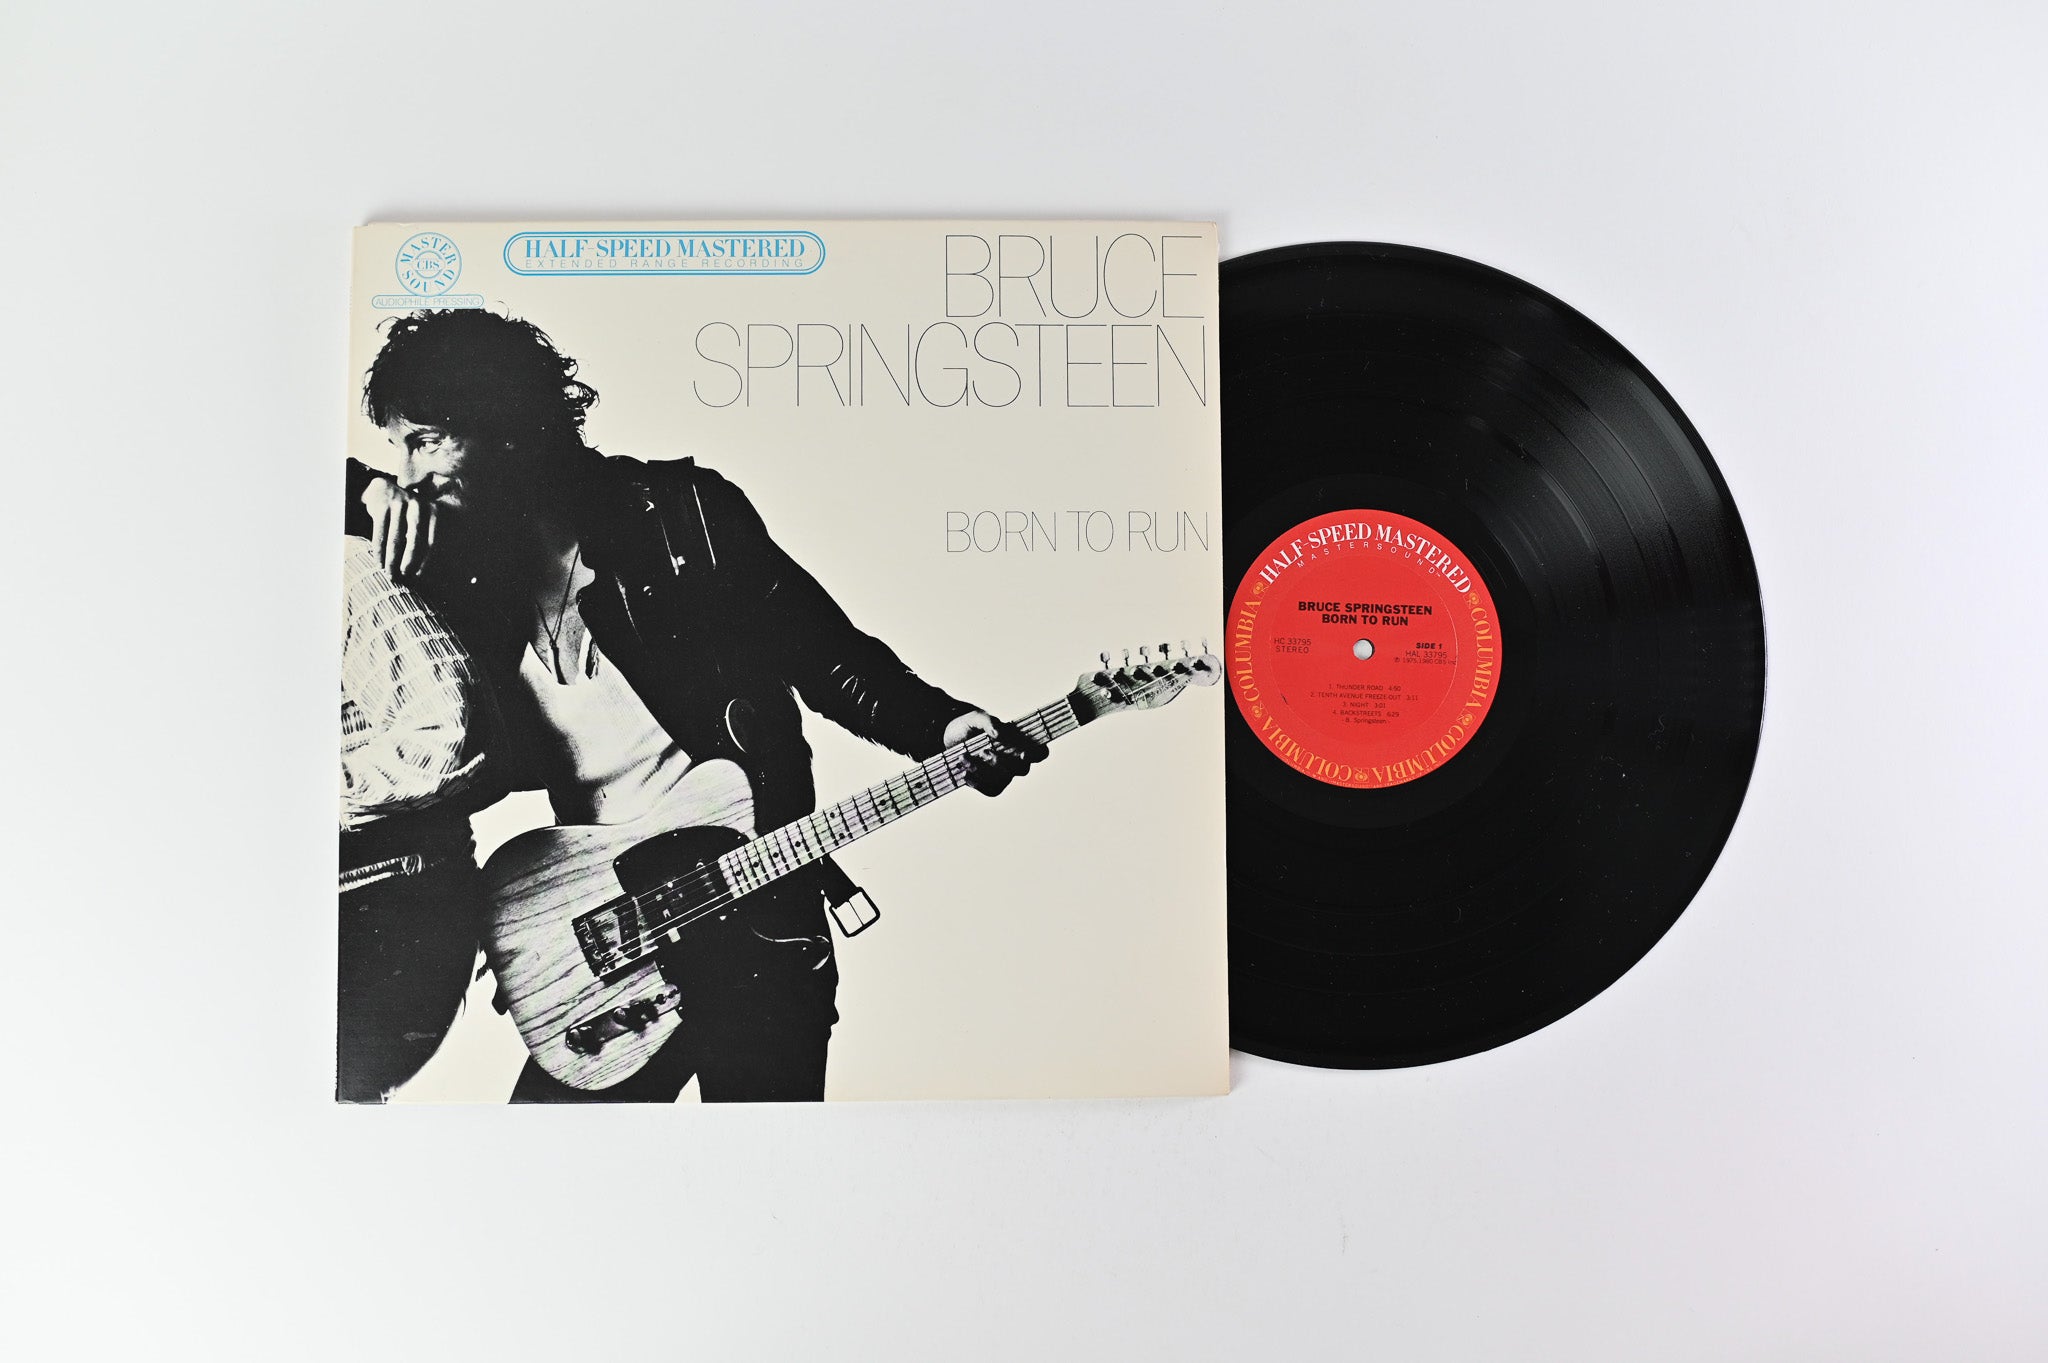 Bruce Springsteen - Born To Run Reissue Half-Speed Mastered on Columbia